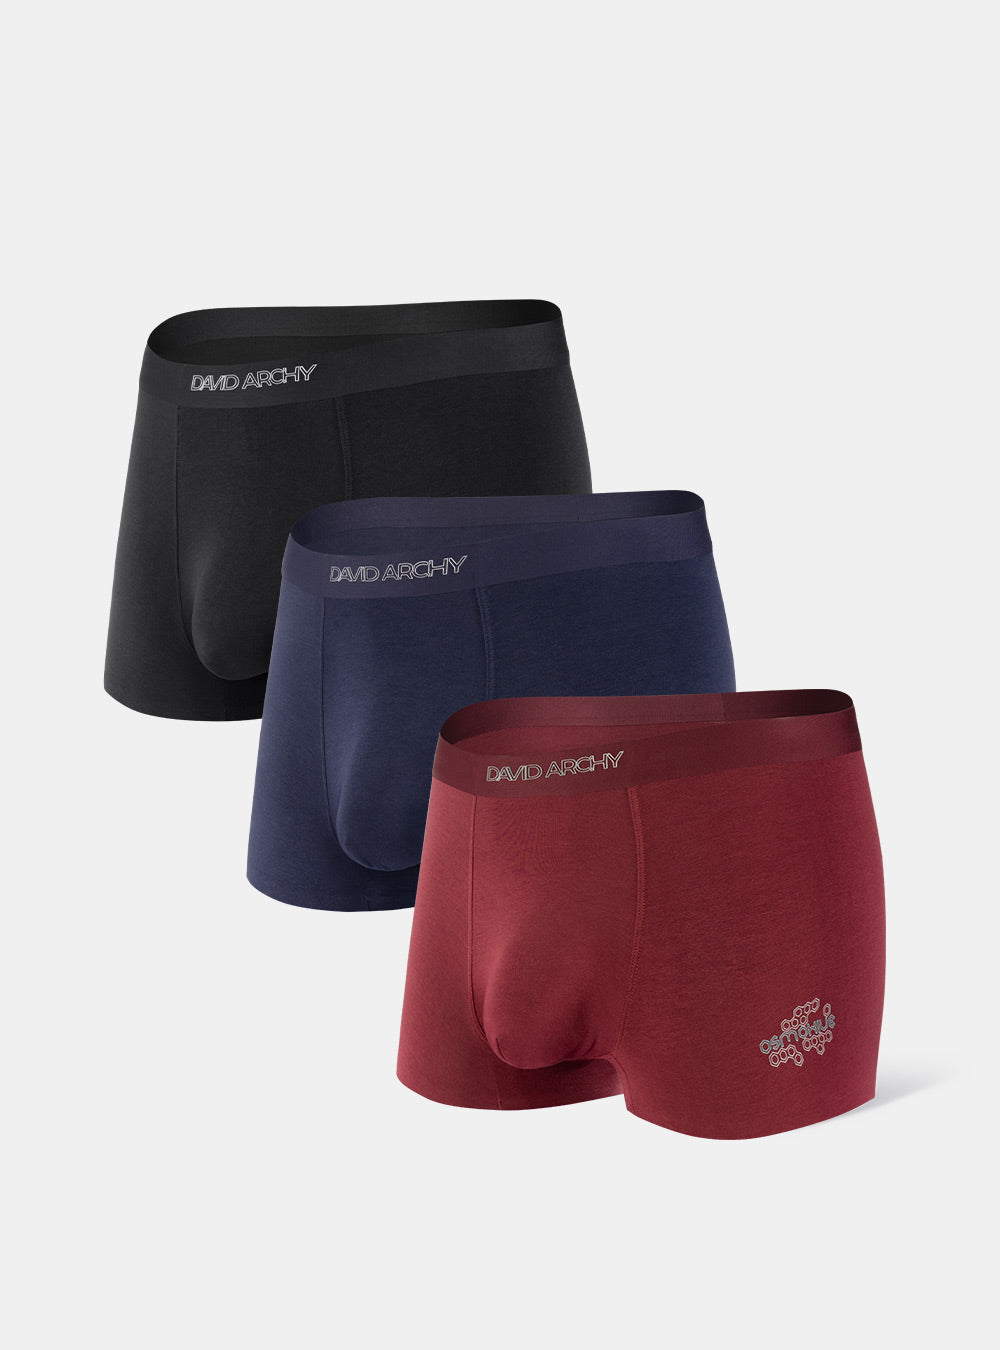 Trophy Husband DesignMens Cotton Trunk Underwear by TooLoud - Davson Sales